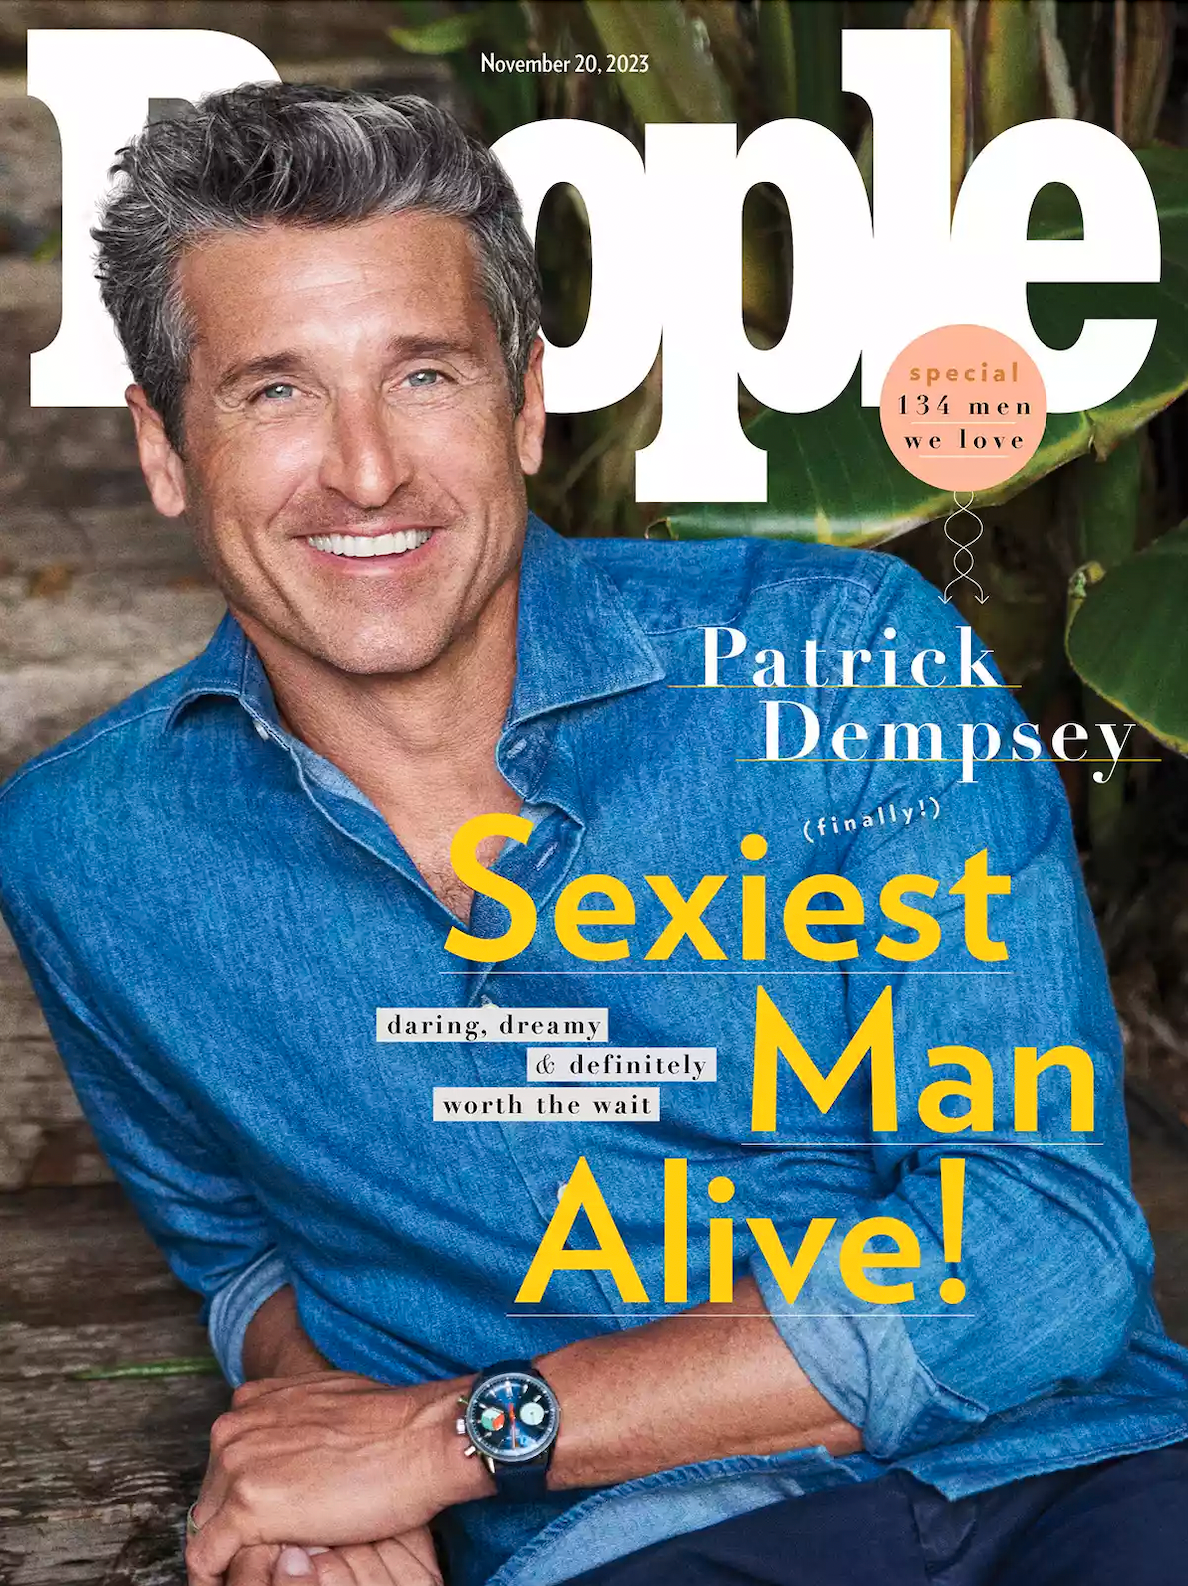 Patrick Dempsey på omslaget av People. 